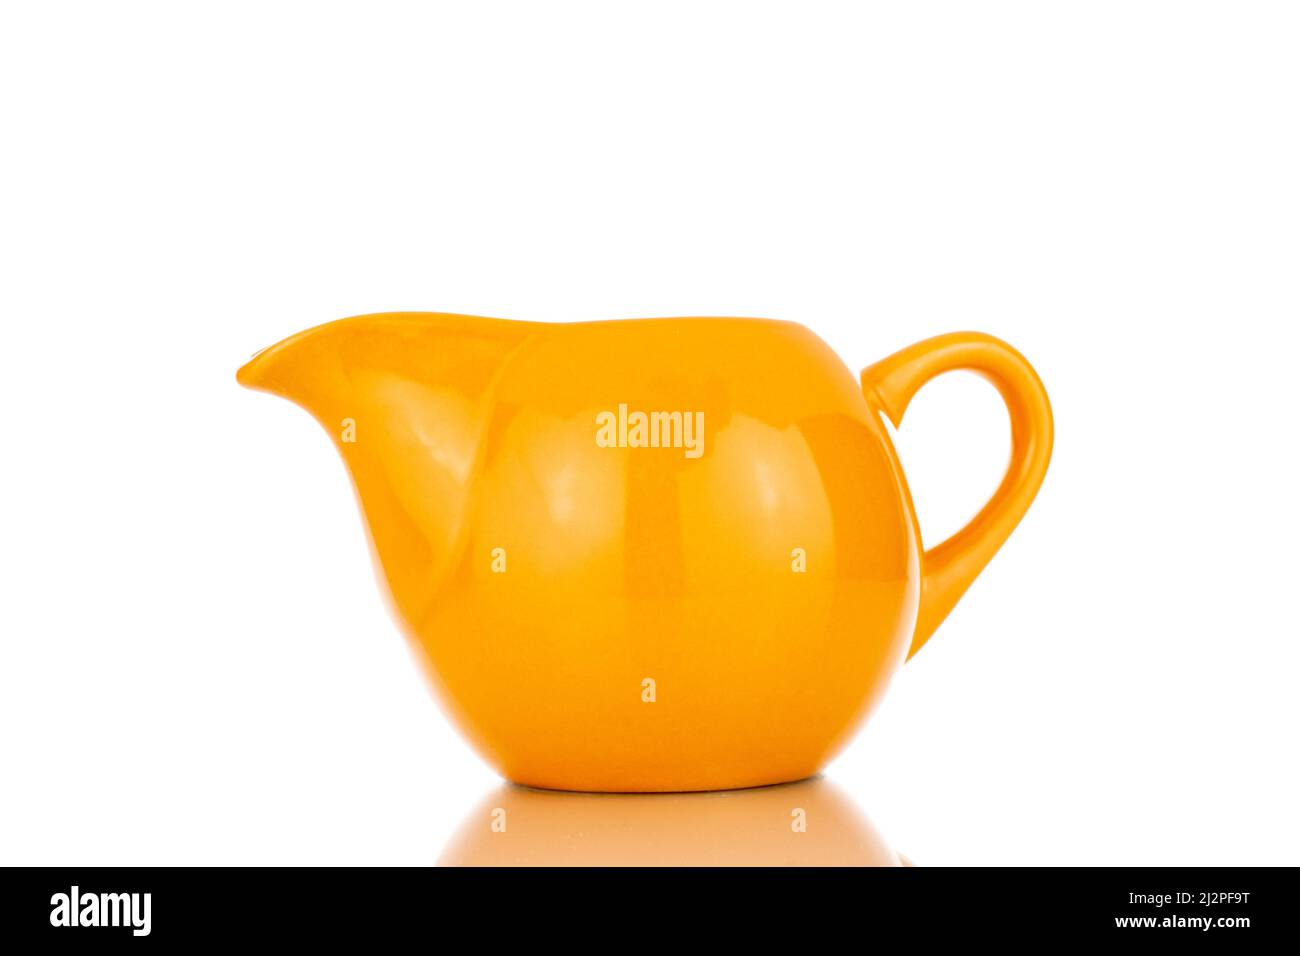 https://c8.alamy.com/comp/2J2PF9T/one-ceramic-milk-jug-close-up-isolated-on-a-white-background-2J2PF9T.jpg